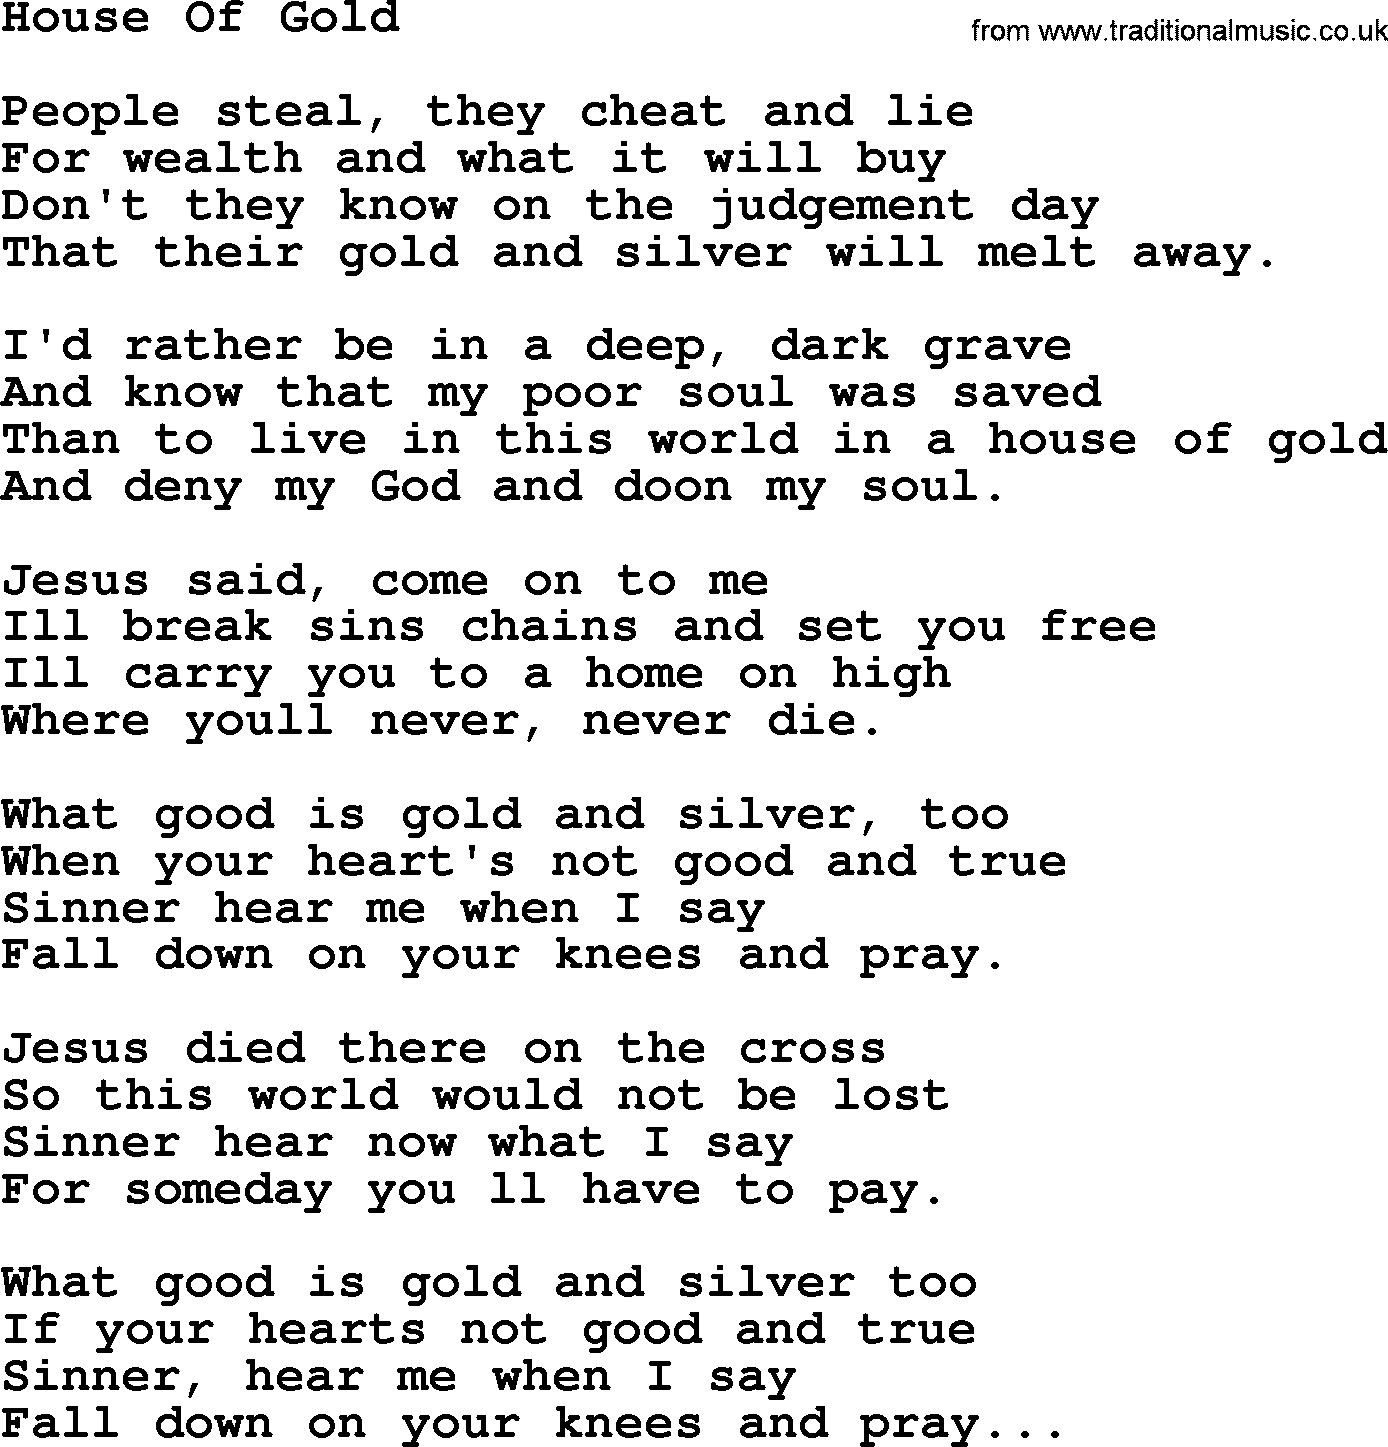 Hank Williams song House Of Gold, lyrics